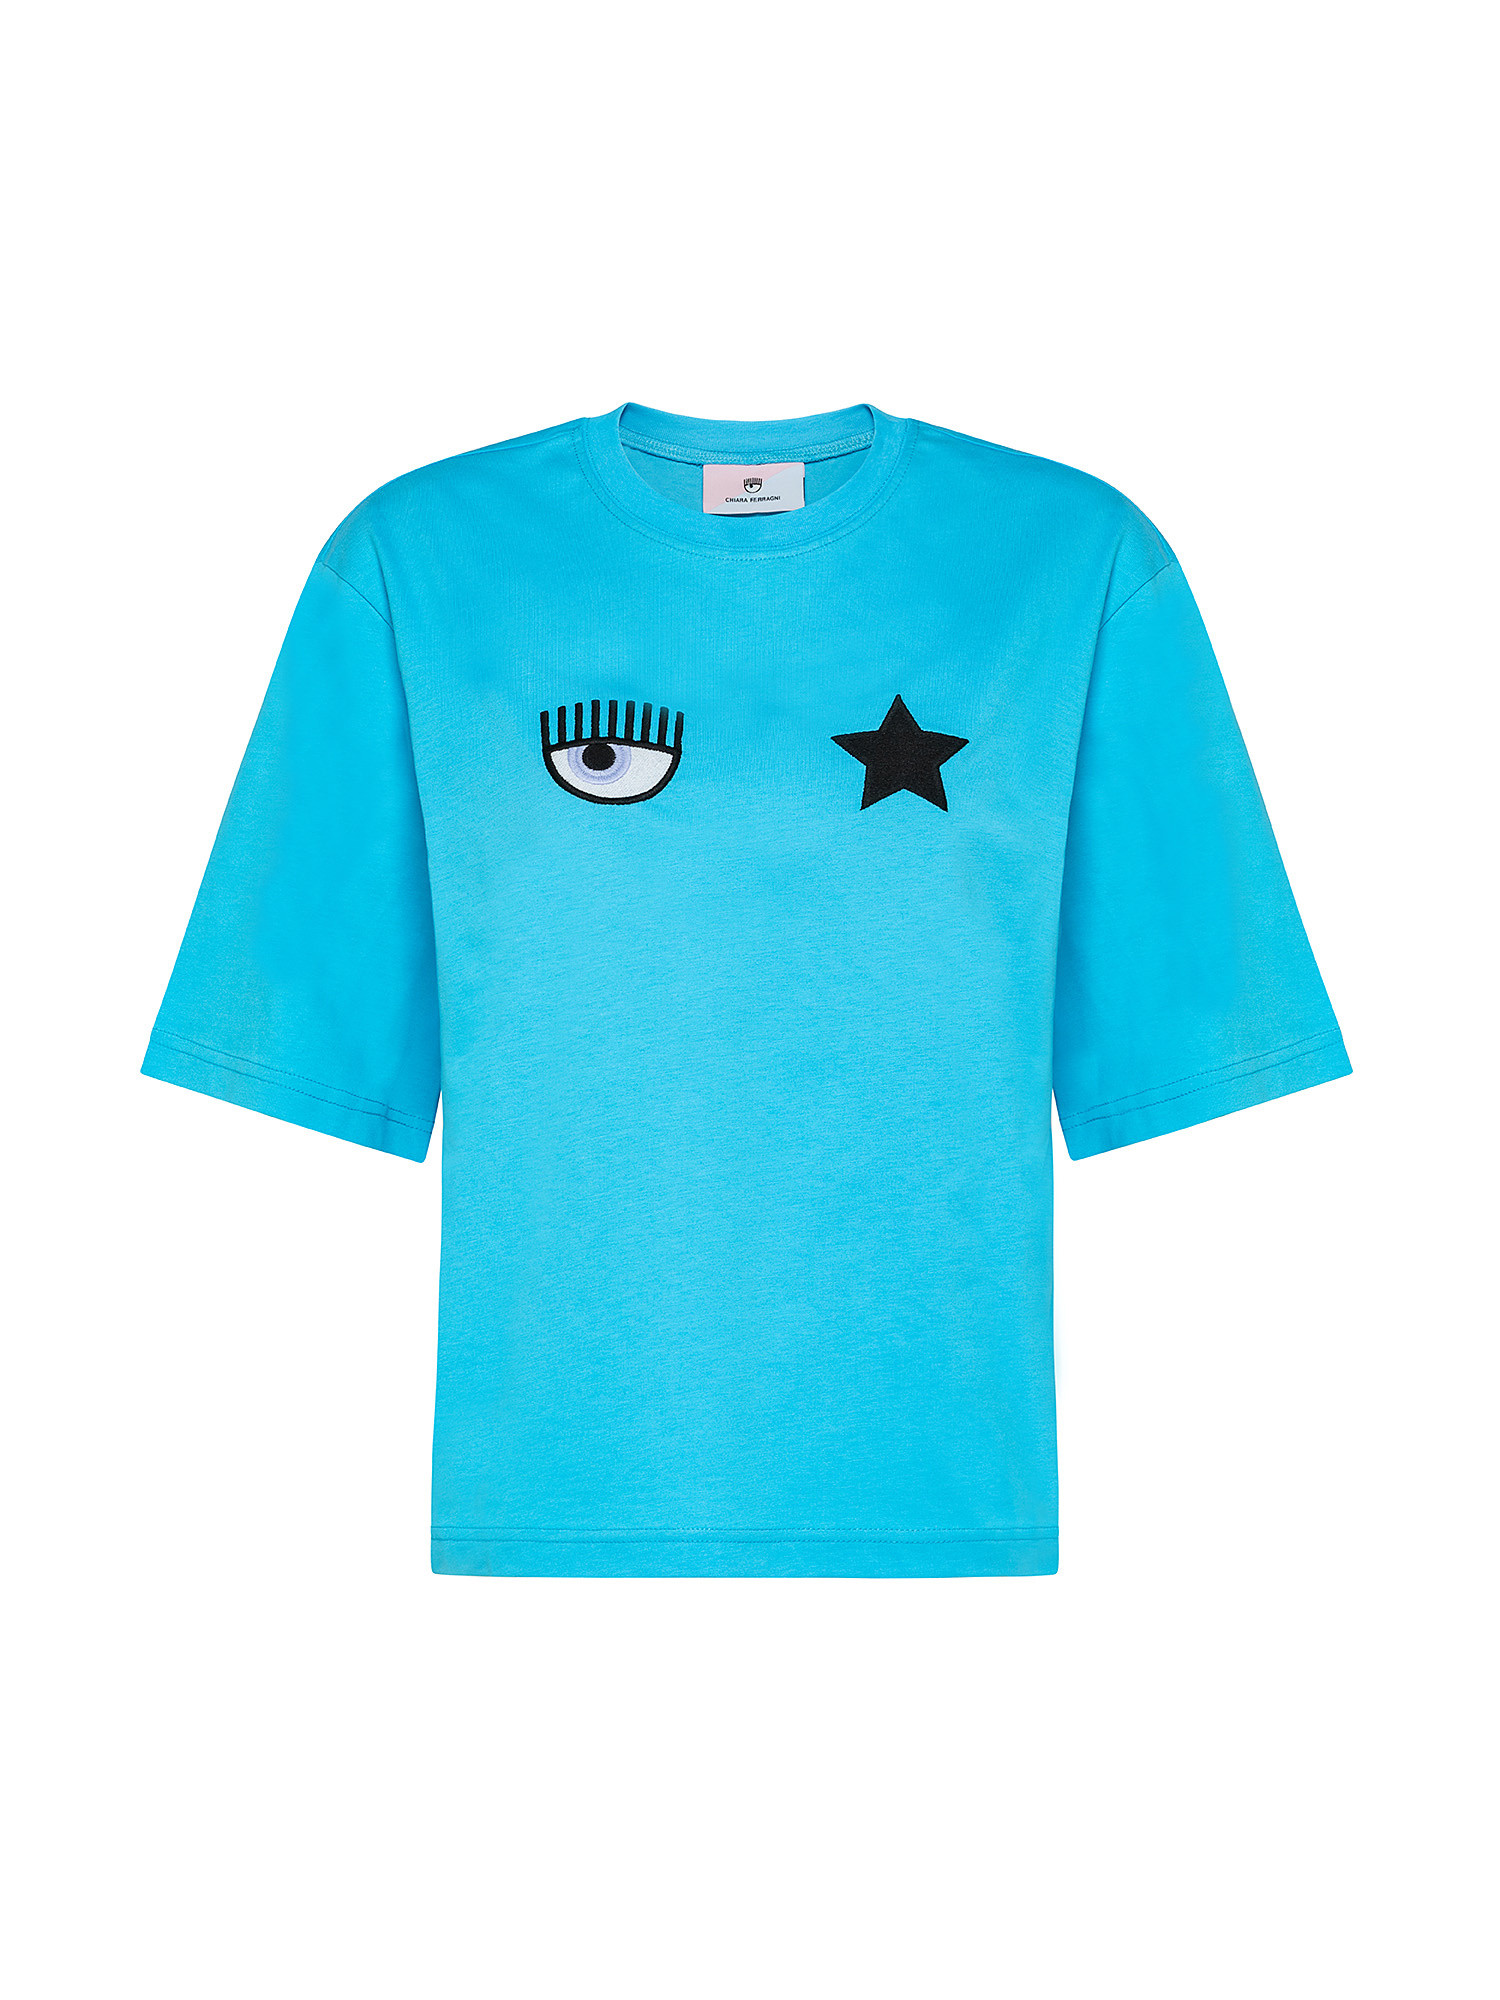 Eye Star T-shirt, Turquoise, large image number 0